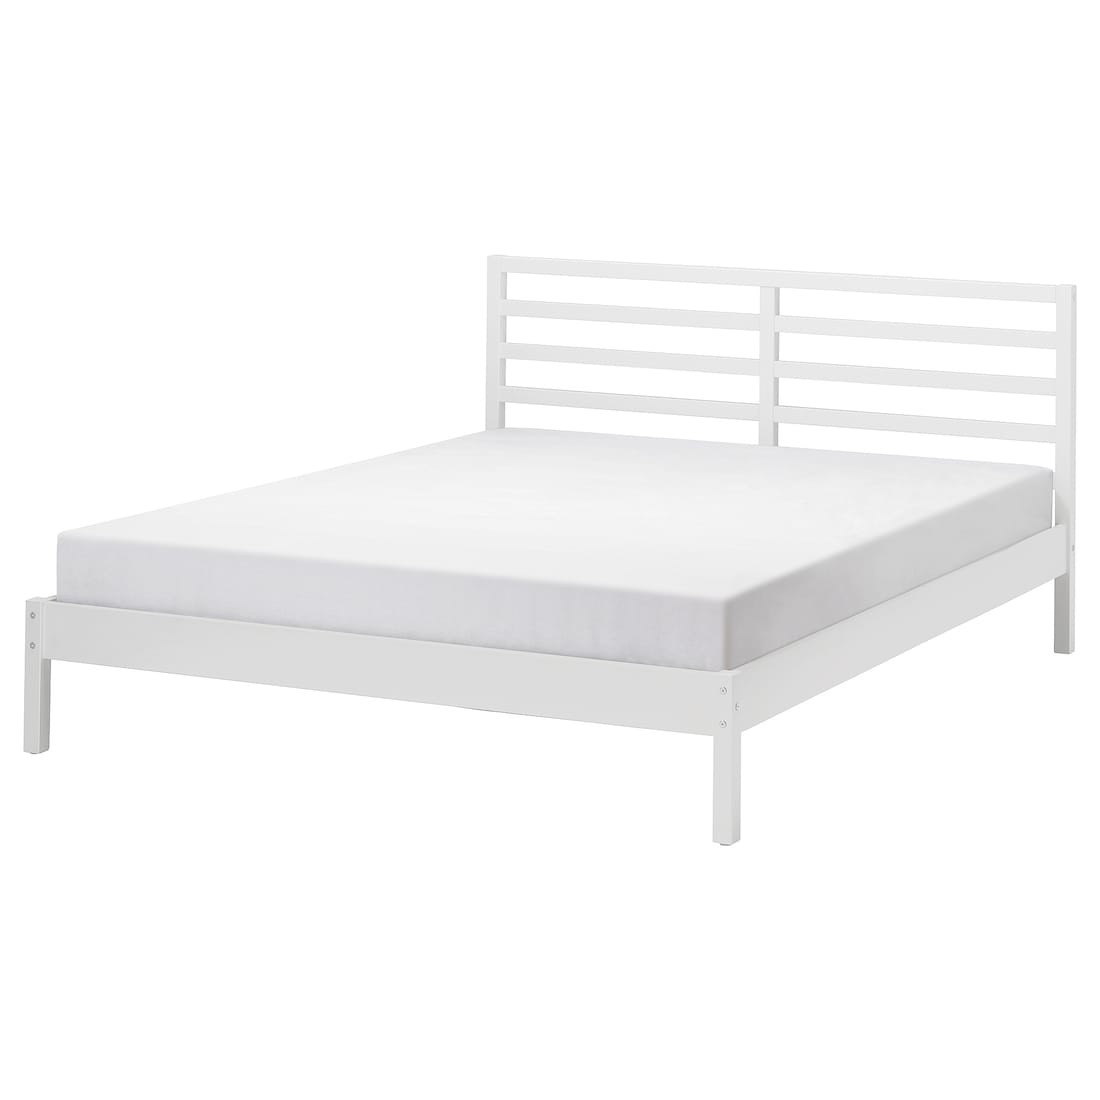 TARVA Кровать, белая морилка / Luröy, 140x200 см